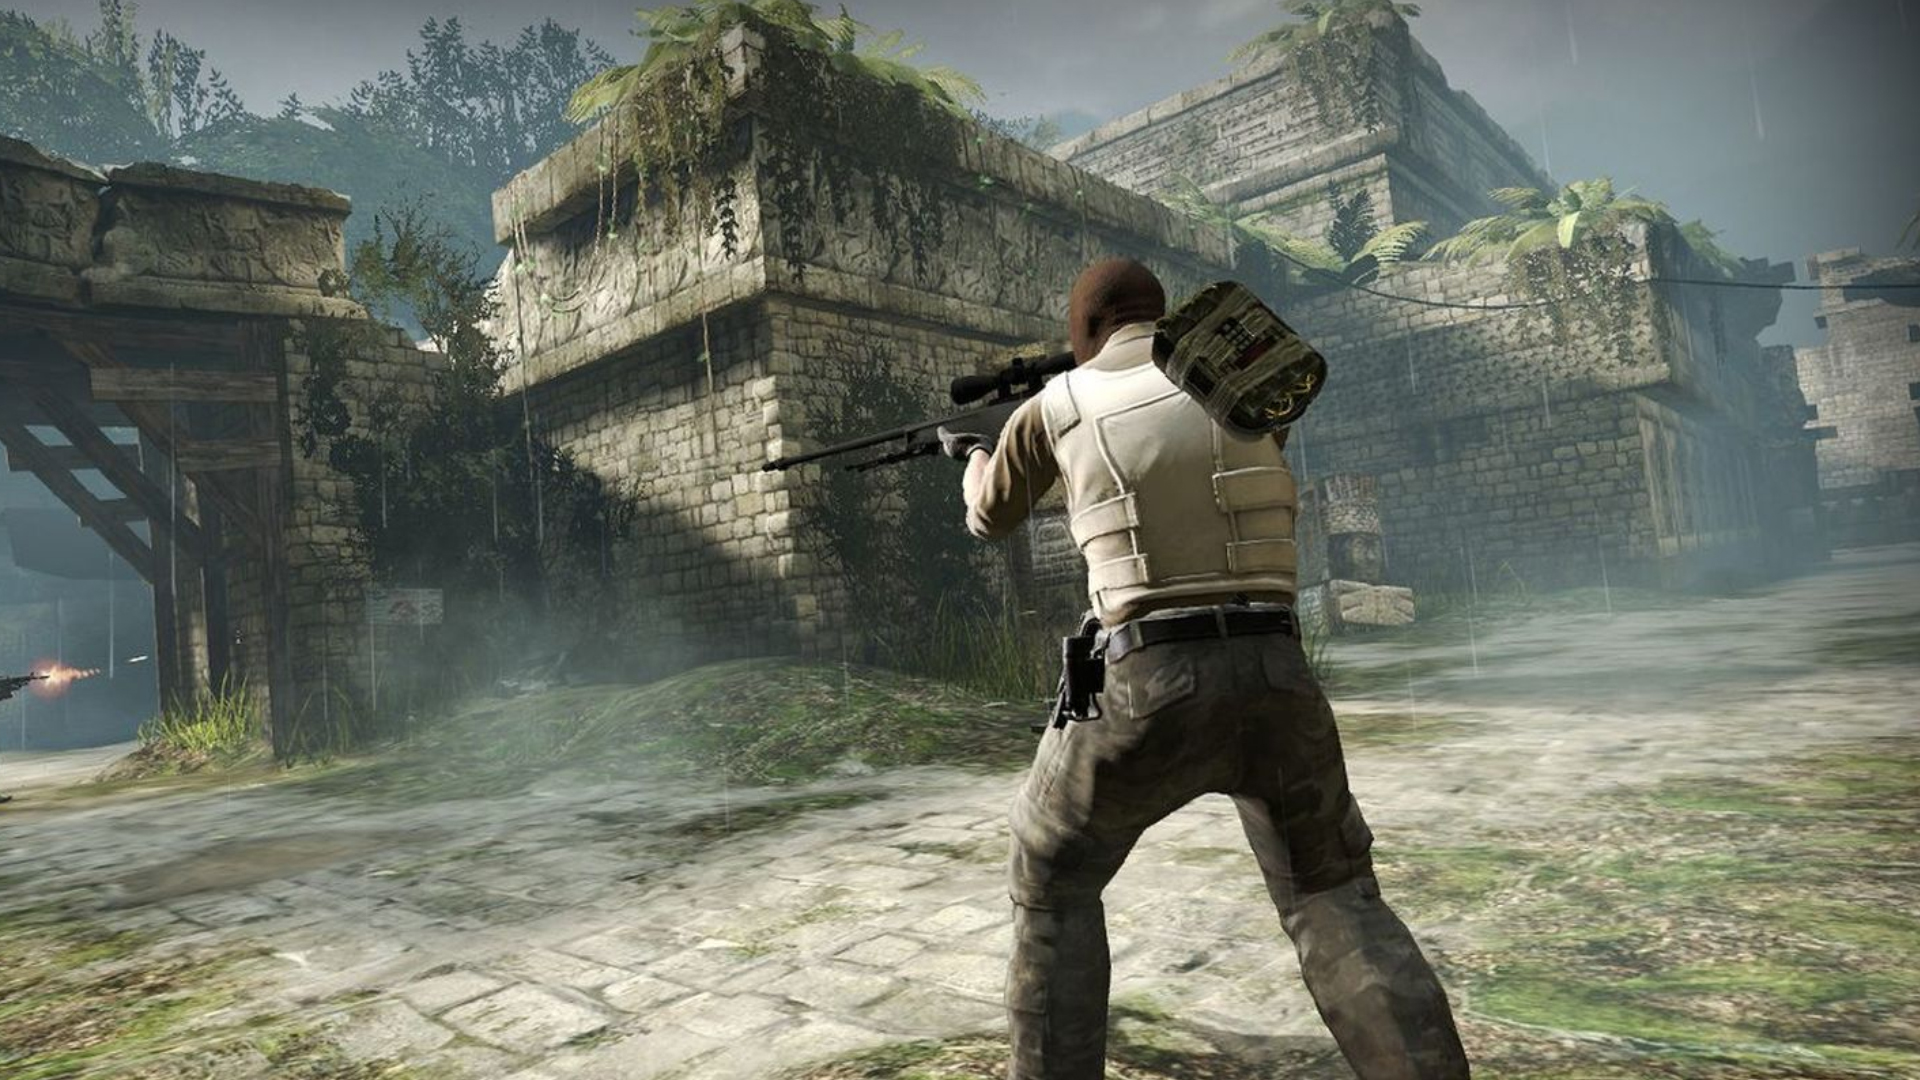 Screenshot for the game Counter-Strike: Global Offensive (CS: GO)